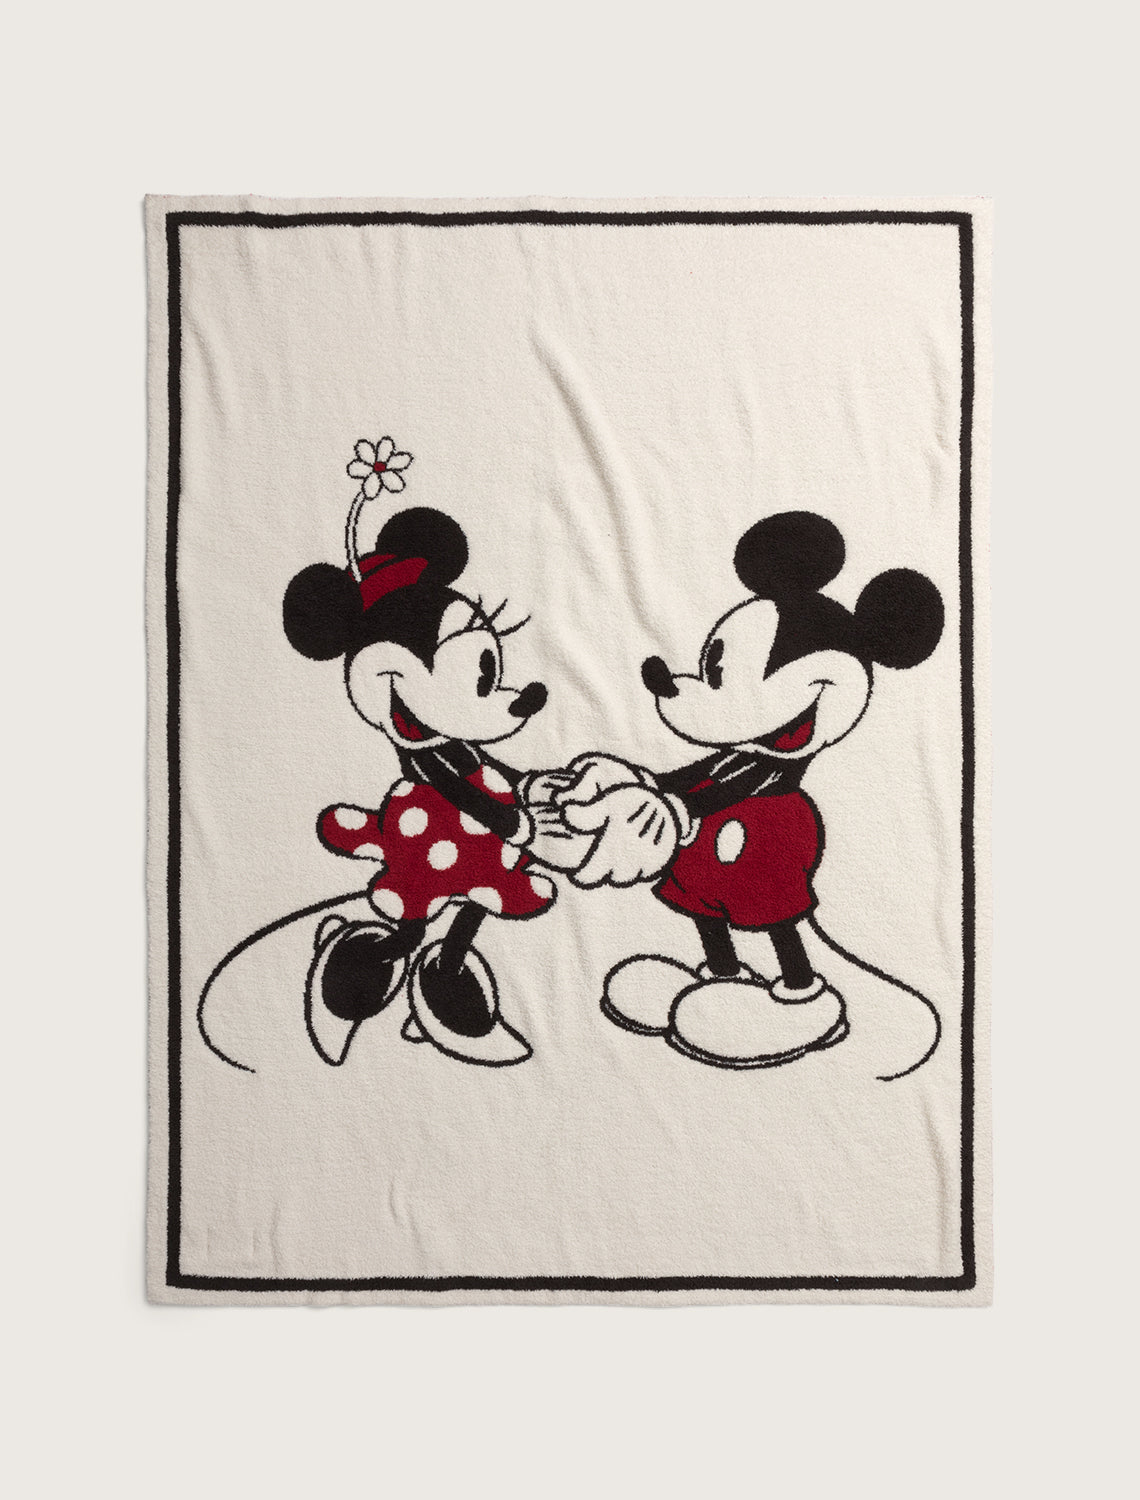 Mickey and Minnie by Adakennedygraham629 on DeviantArt